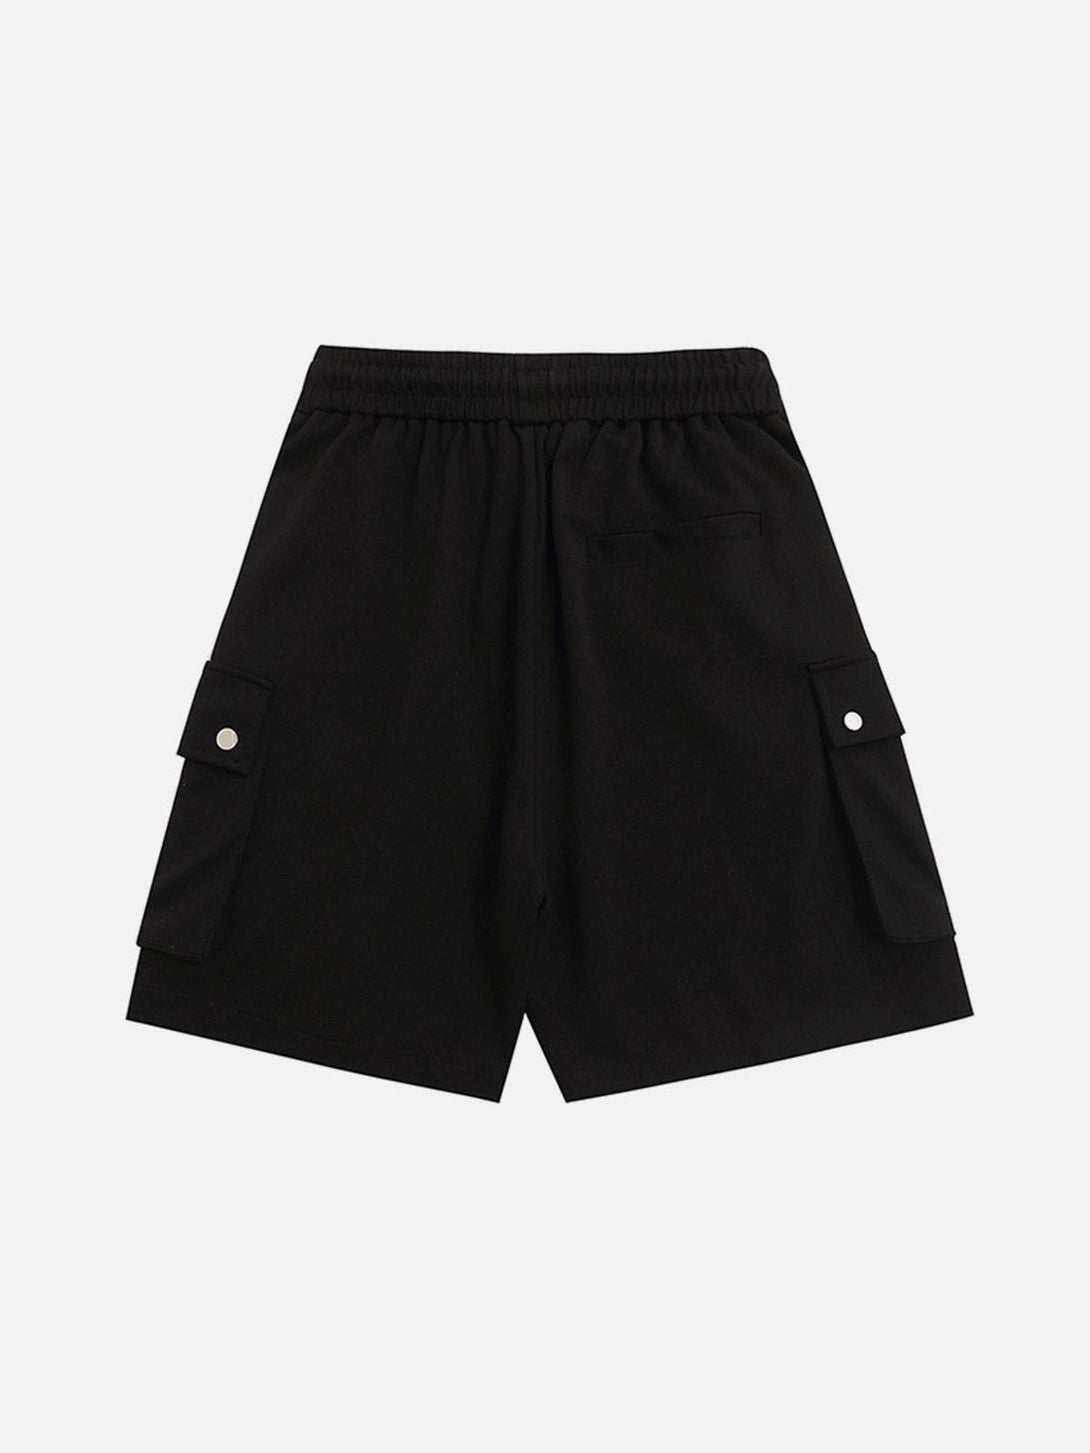 Majesda® - Large Pockets Shorts outfit ideas streetwear fashion